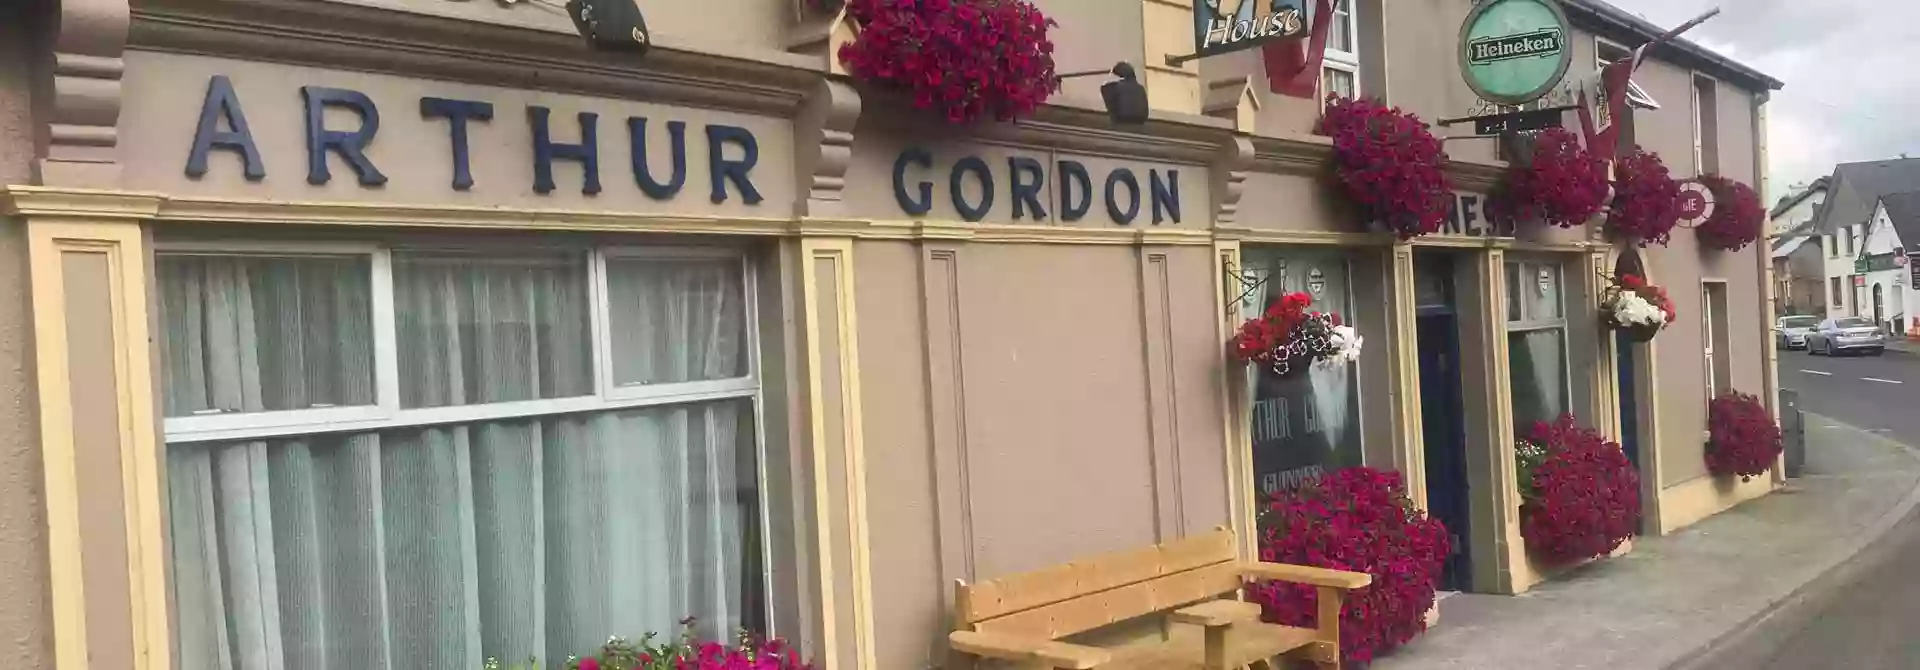 Gordon's Guesthouse & Restaurant